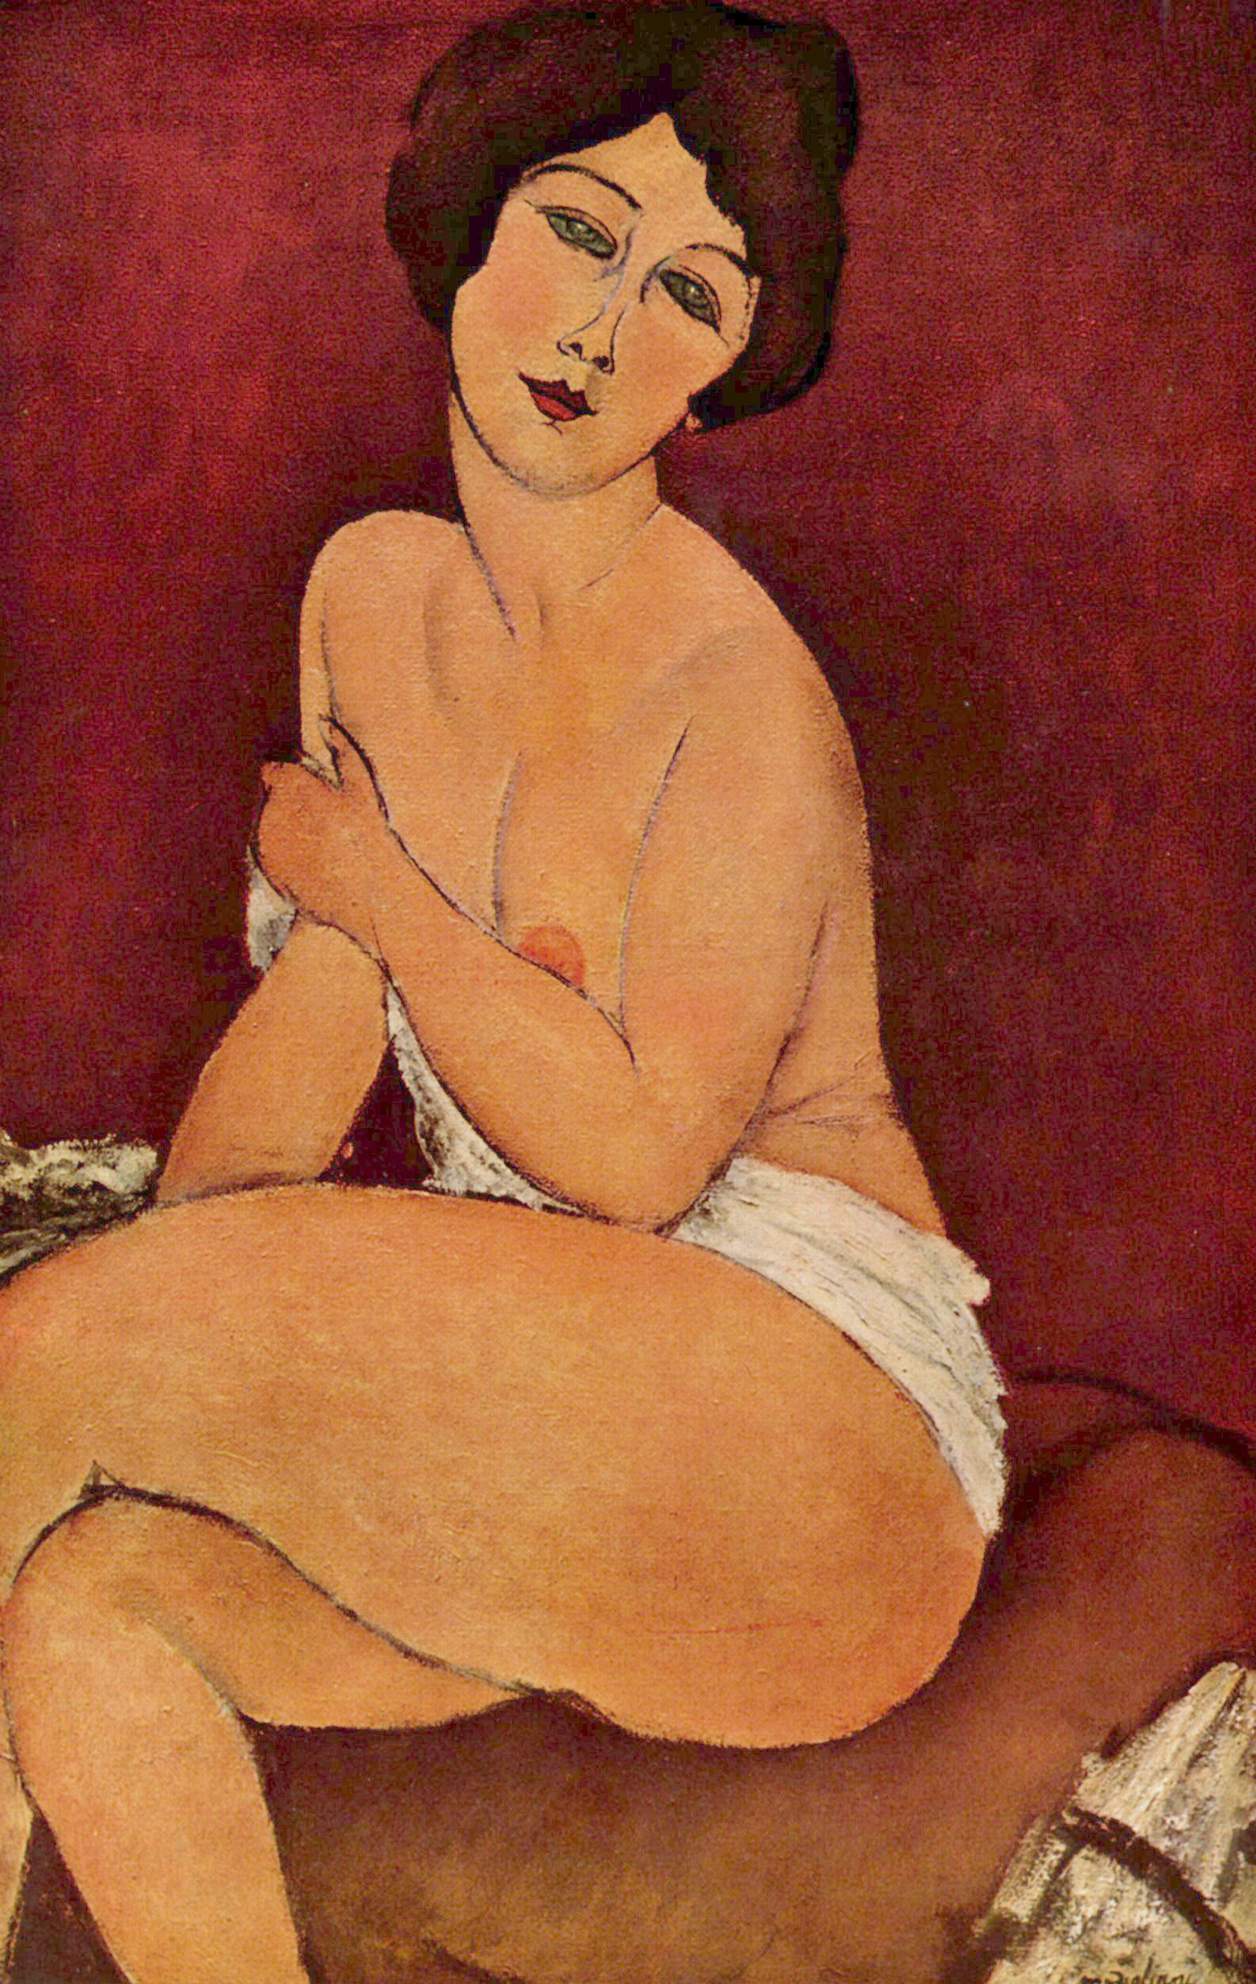 1917. Nude Sitting on a Divan (The Beautiful Roman Woman) by Amedeo Modigliani